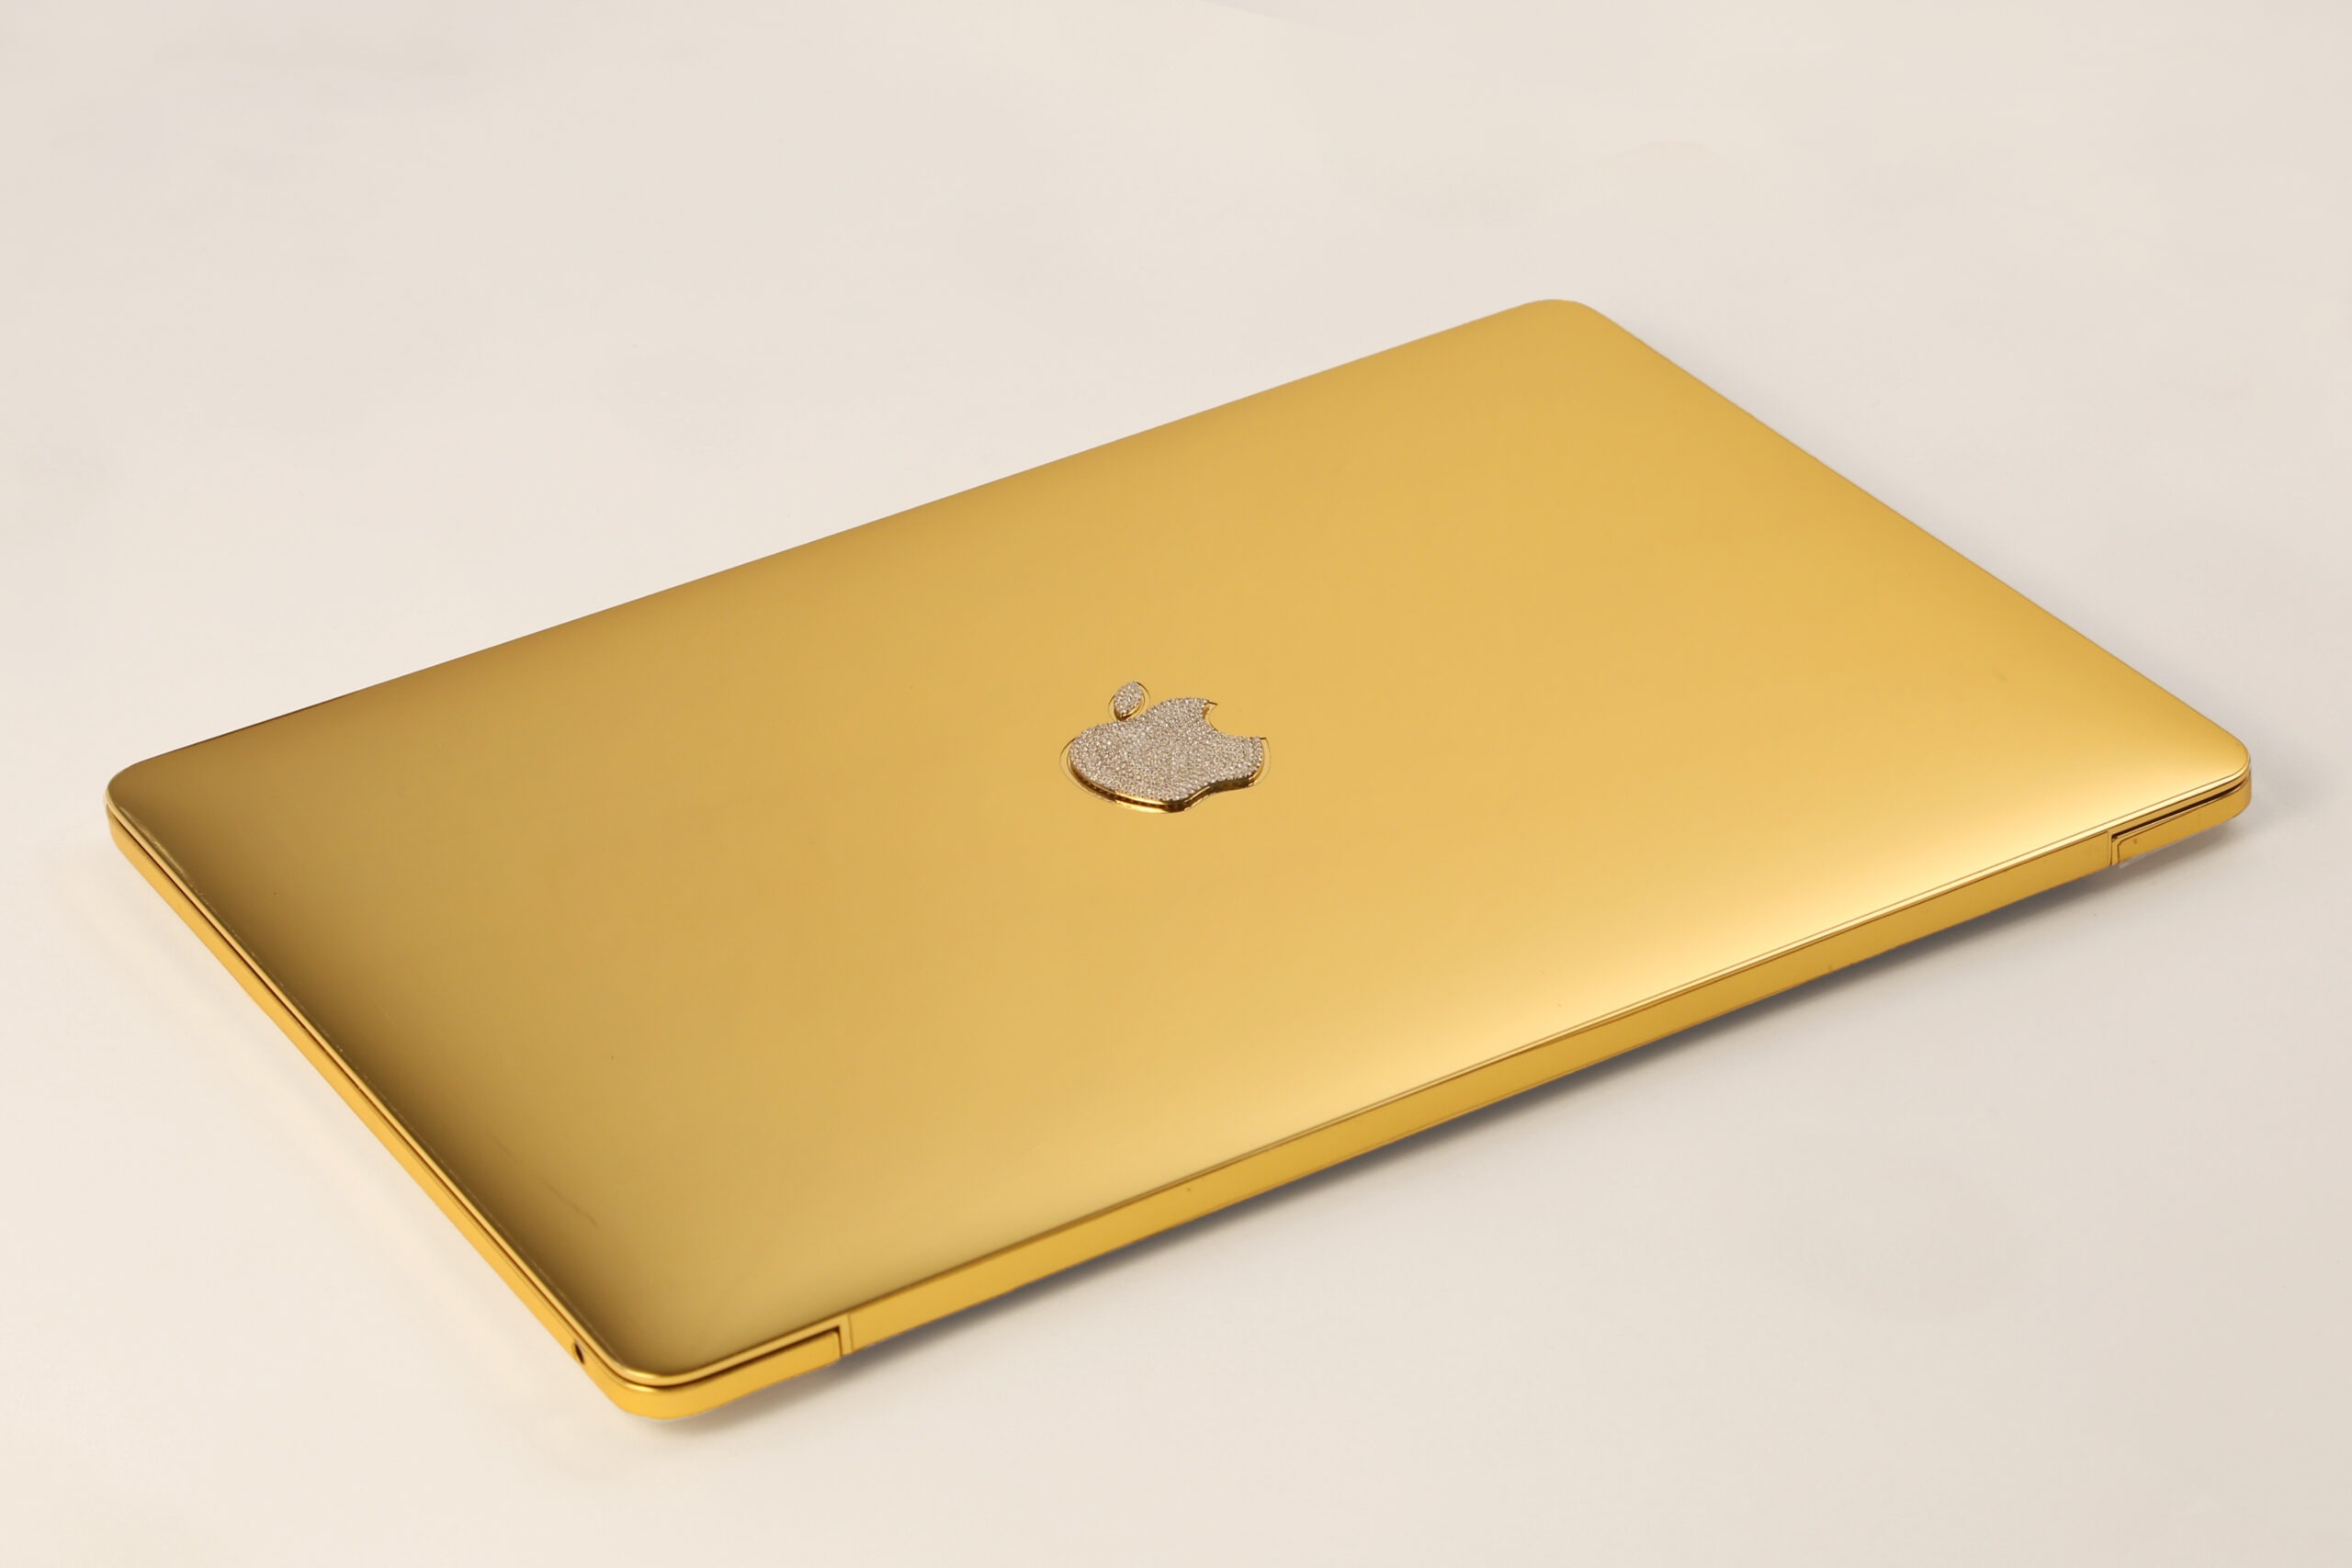 MacBook (Retina 12-inch Early 2015) Gold